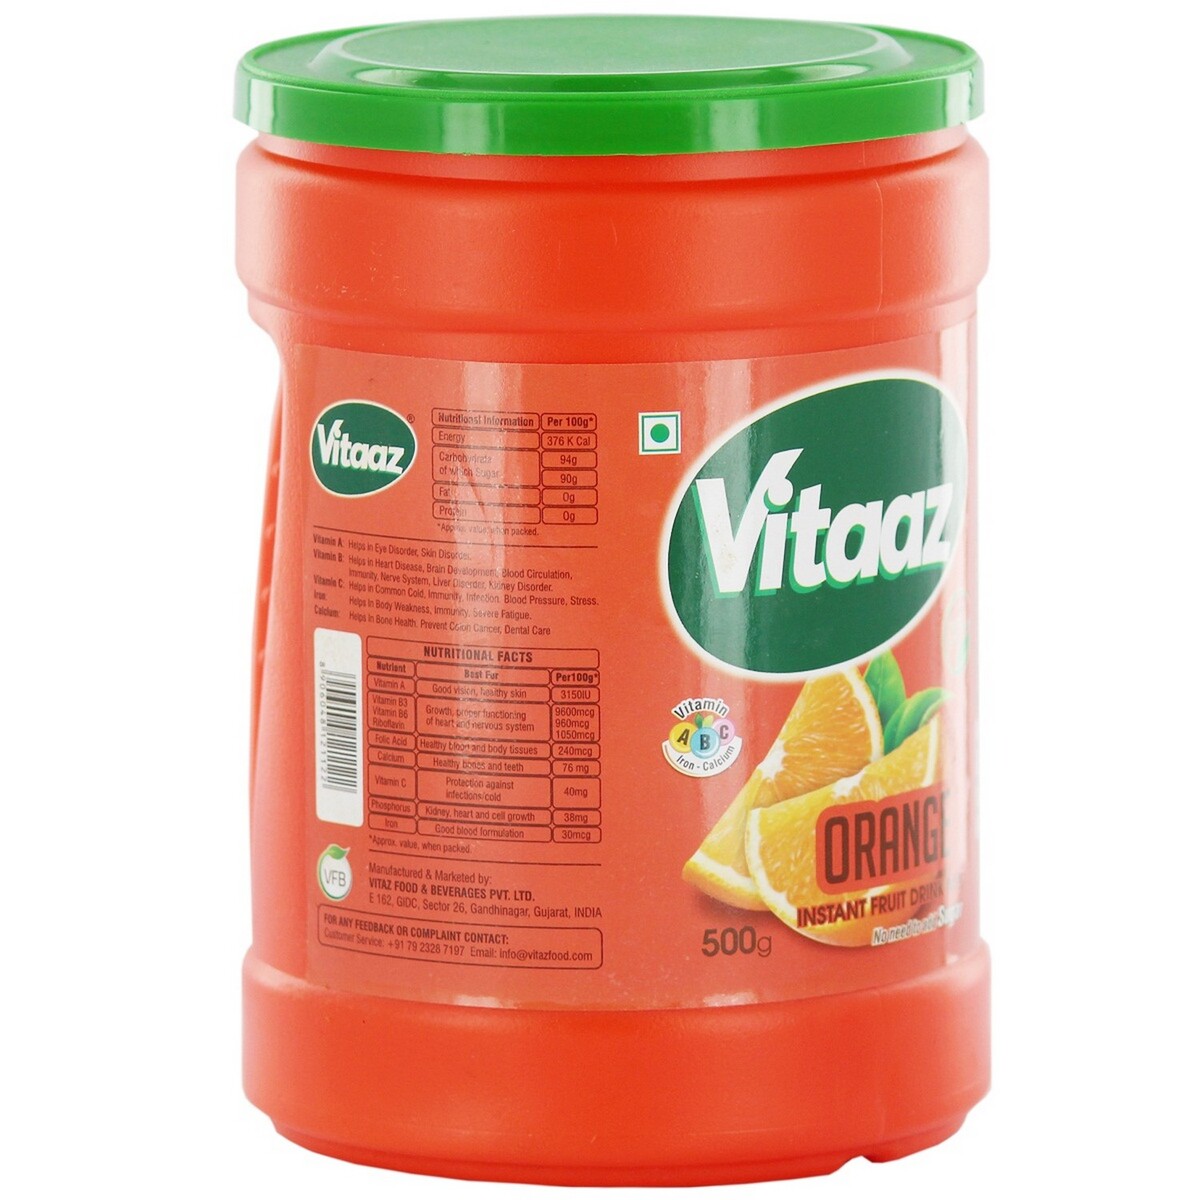 Vitaaz Instant Fruit drink Orange 500g